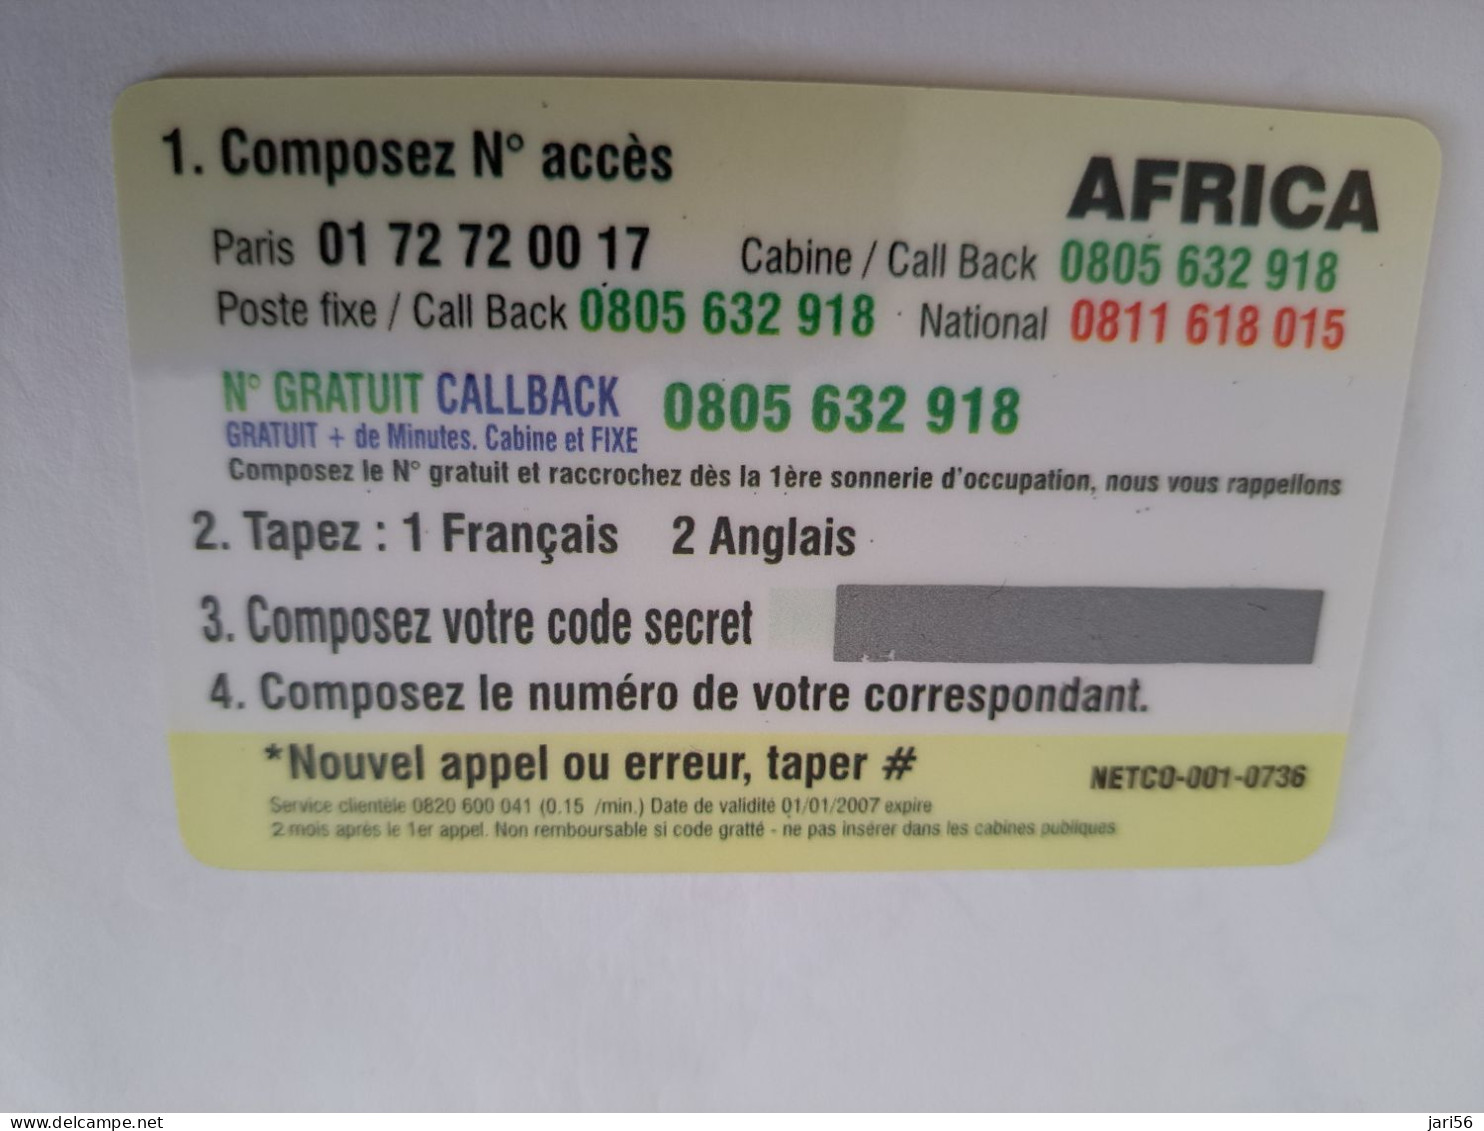 FRANCE/FRANKRIJK  / € 7,5/ AFRICA MAGHREB  / MOSQUE MINARETTES    / PREPAID  MINT        ** 14721** - Mobicartes (GSM/SIM)